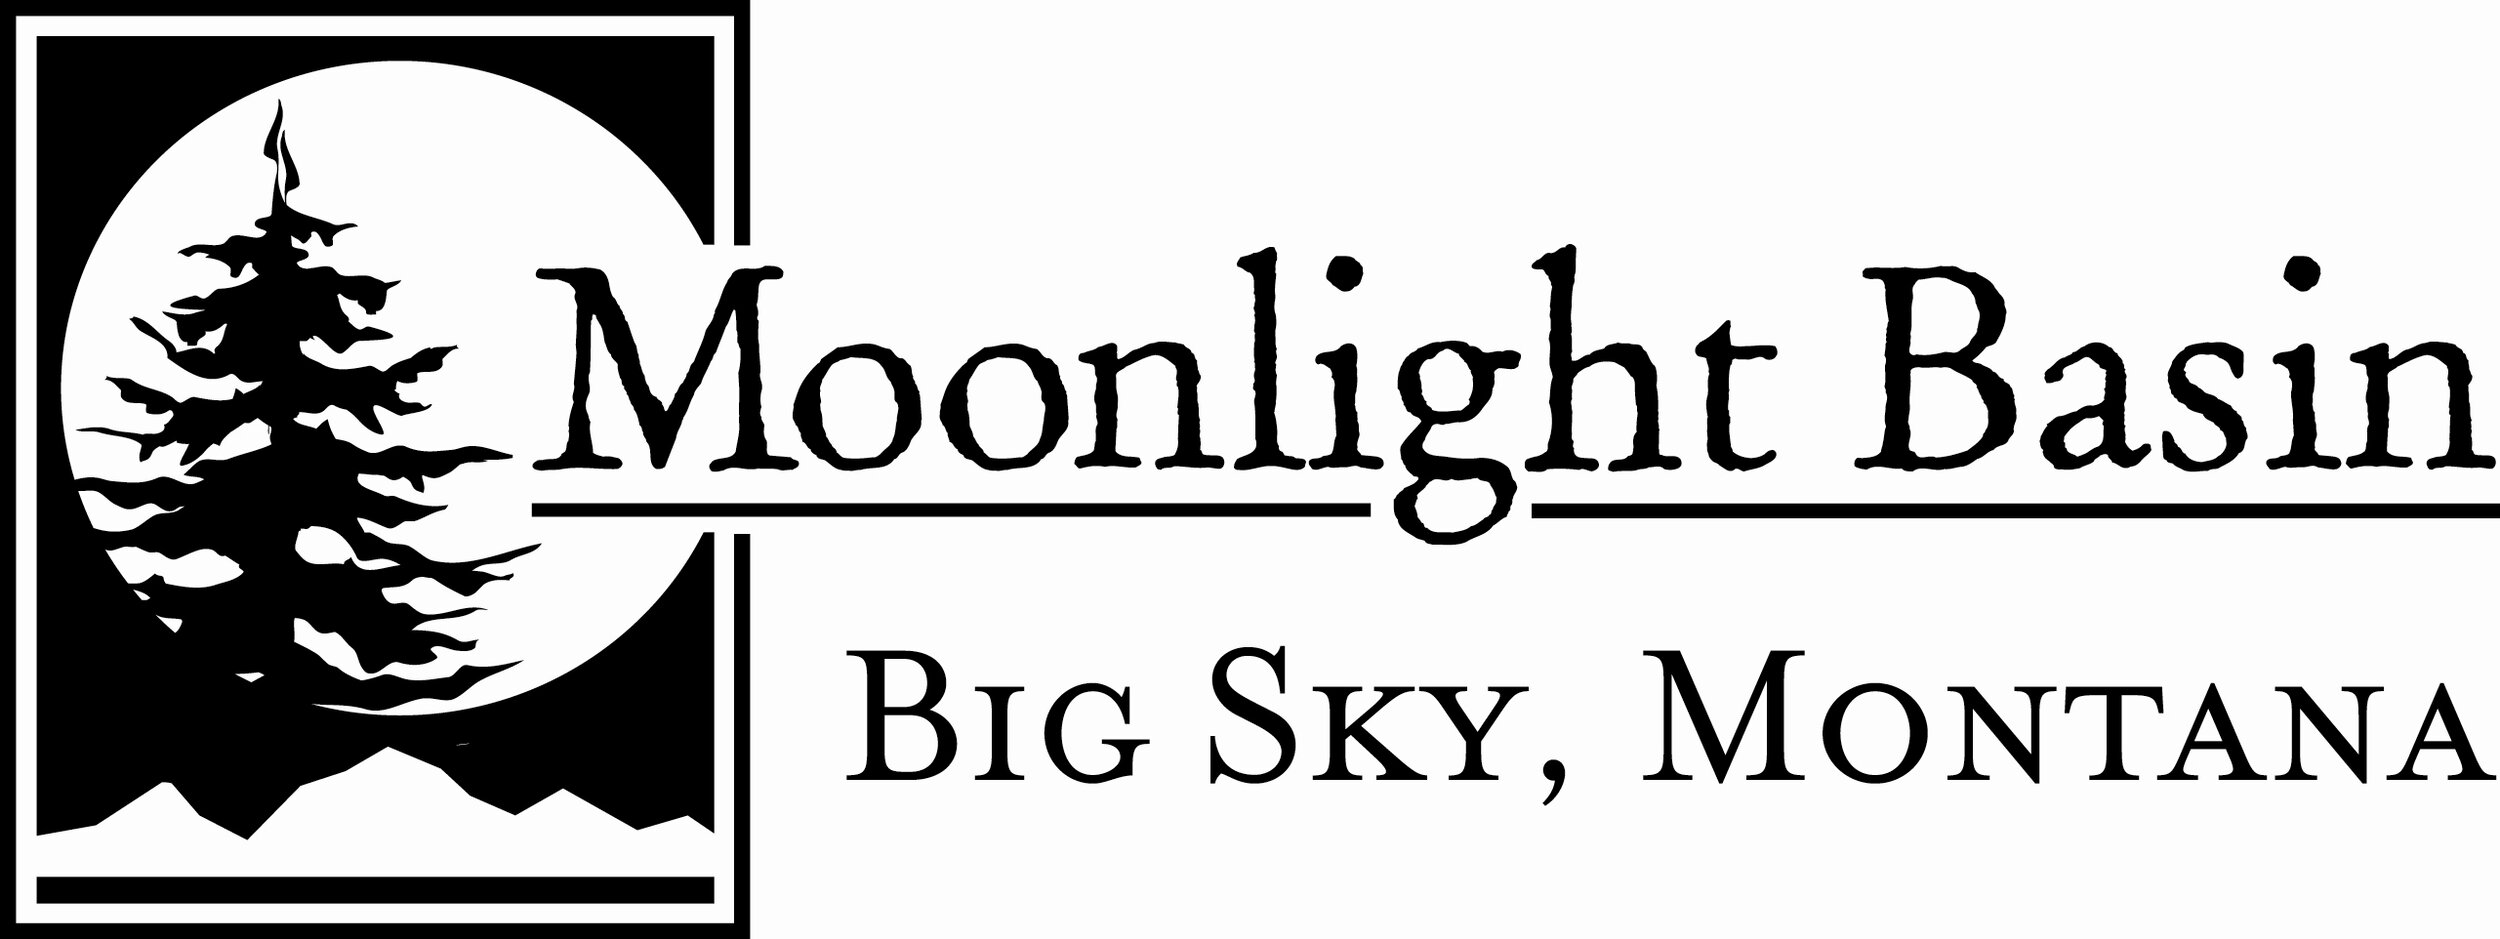 Moonlight Basin logo with Big Sky, MT.jpeg